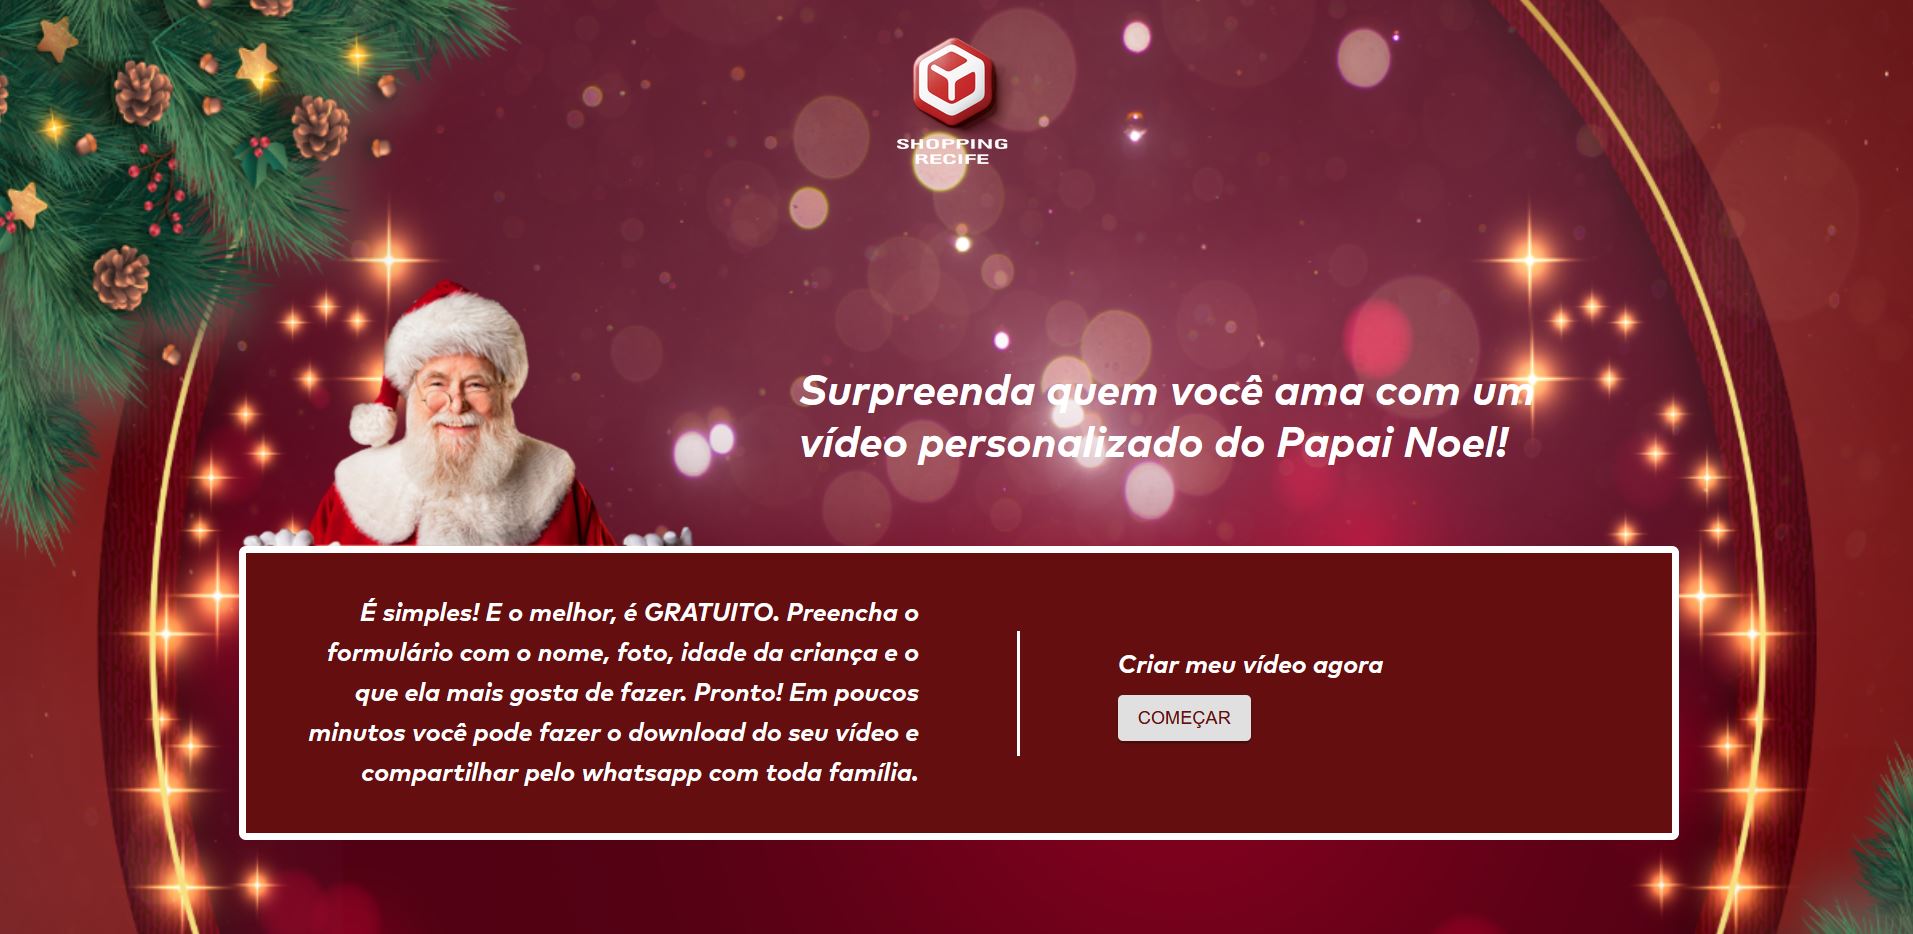 Shopping Recife disponibiliza site para envio de recadinhos do Papai Noel |  Portal Pinzón